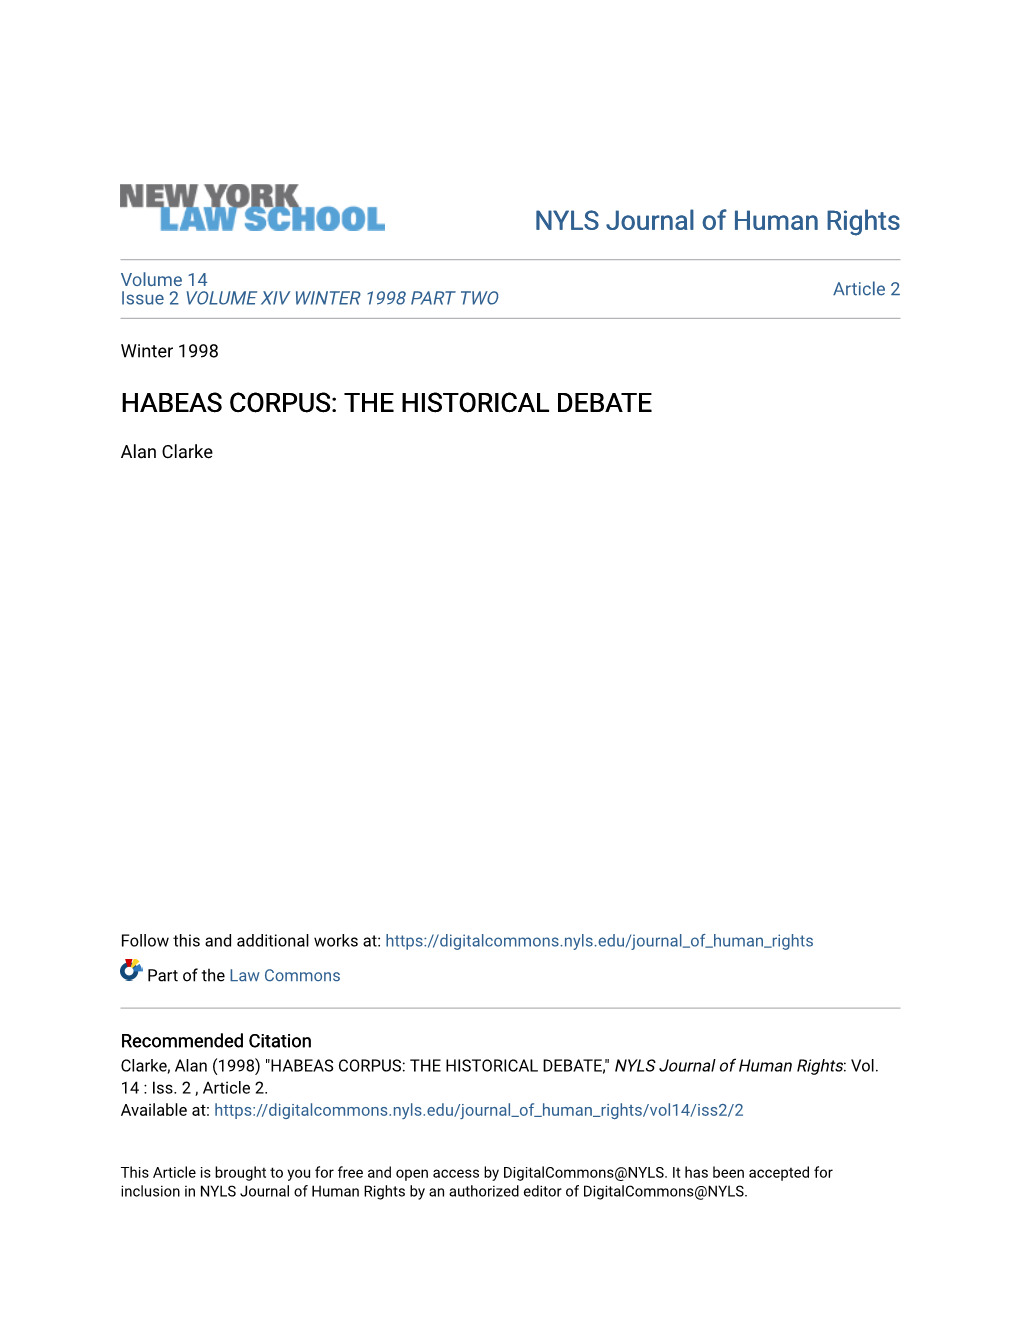 Habeas Corpus: the Historical Debate